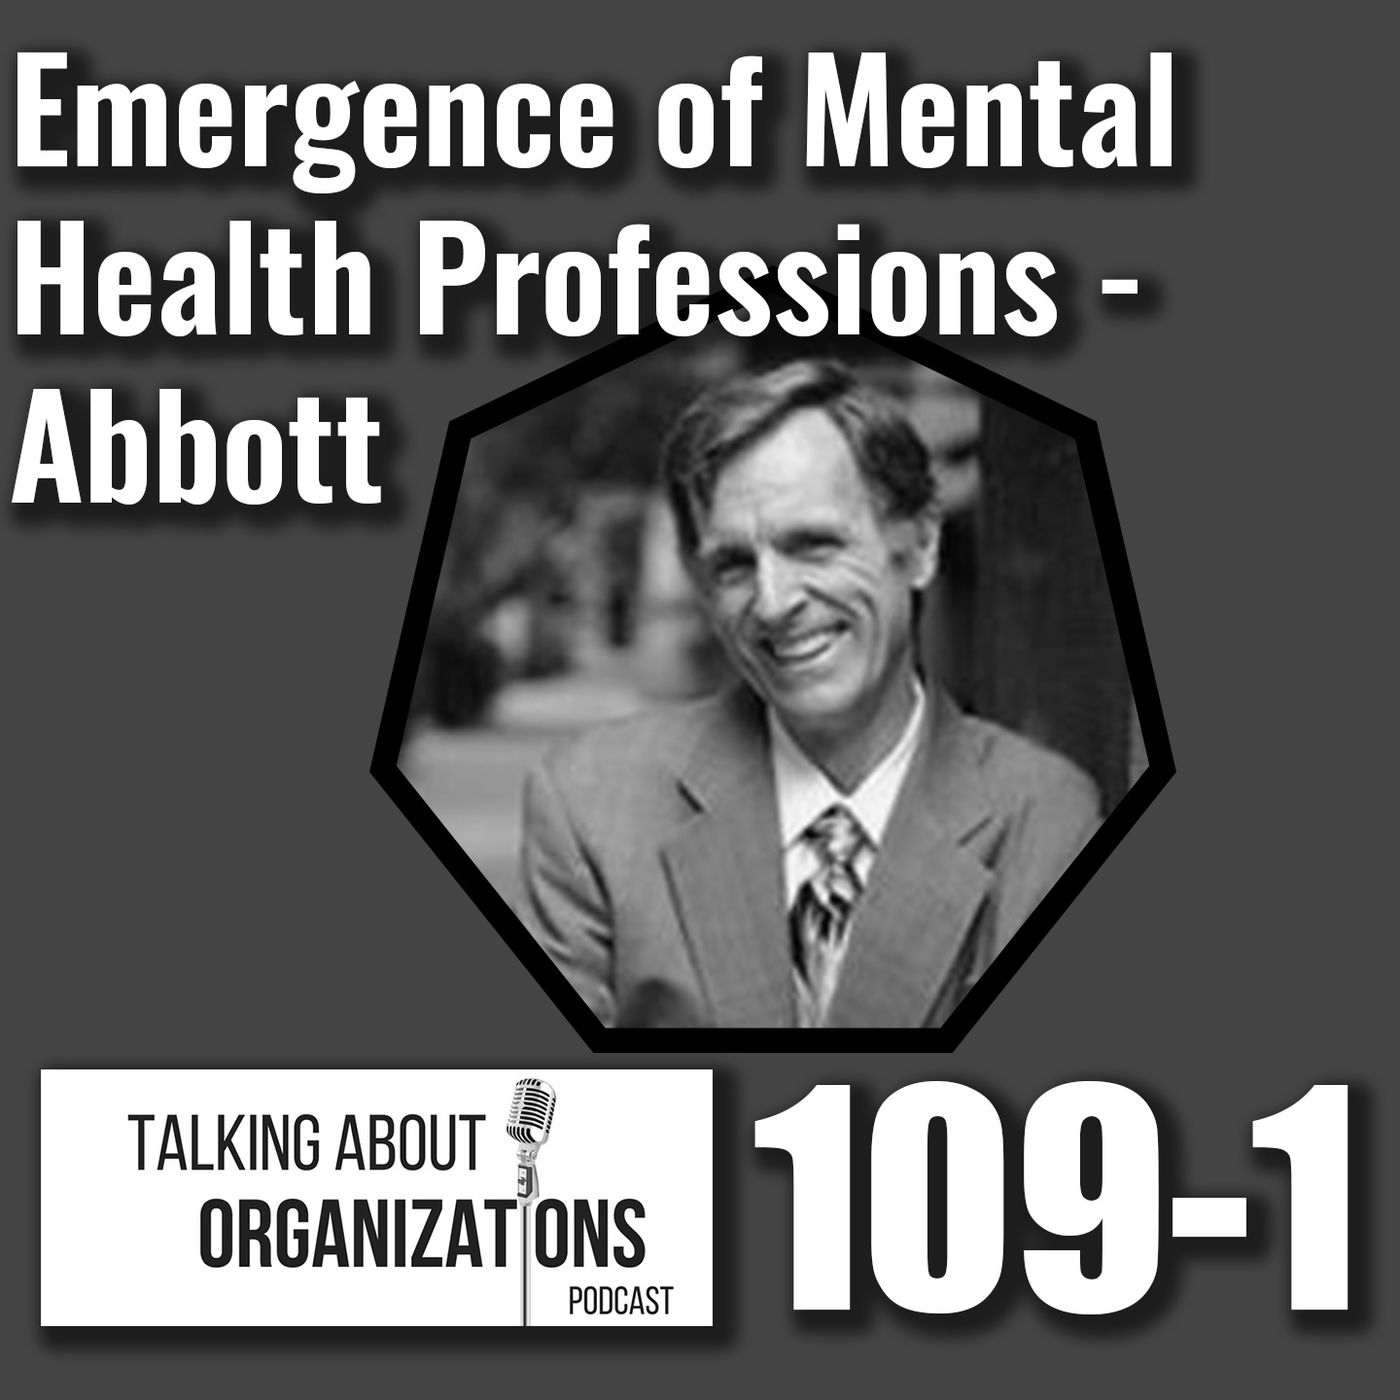 109: Emergence of Mental Health Professions - Abbott (Part 1)